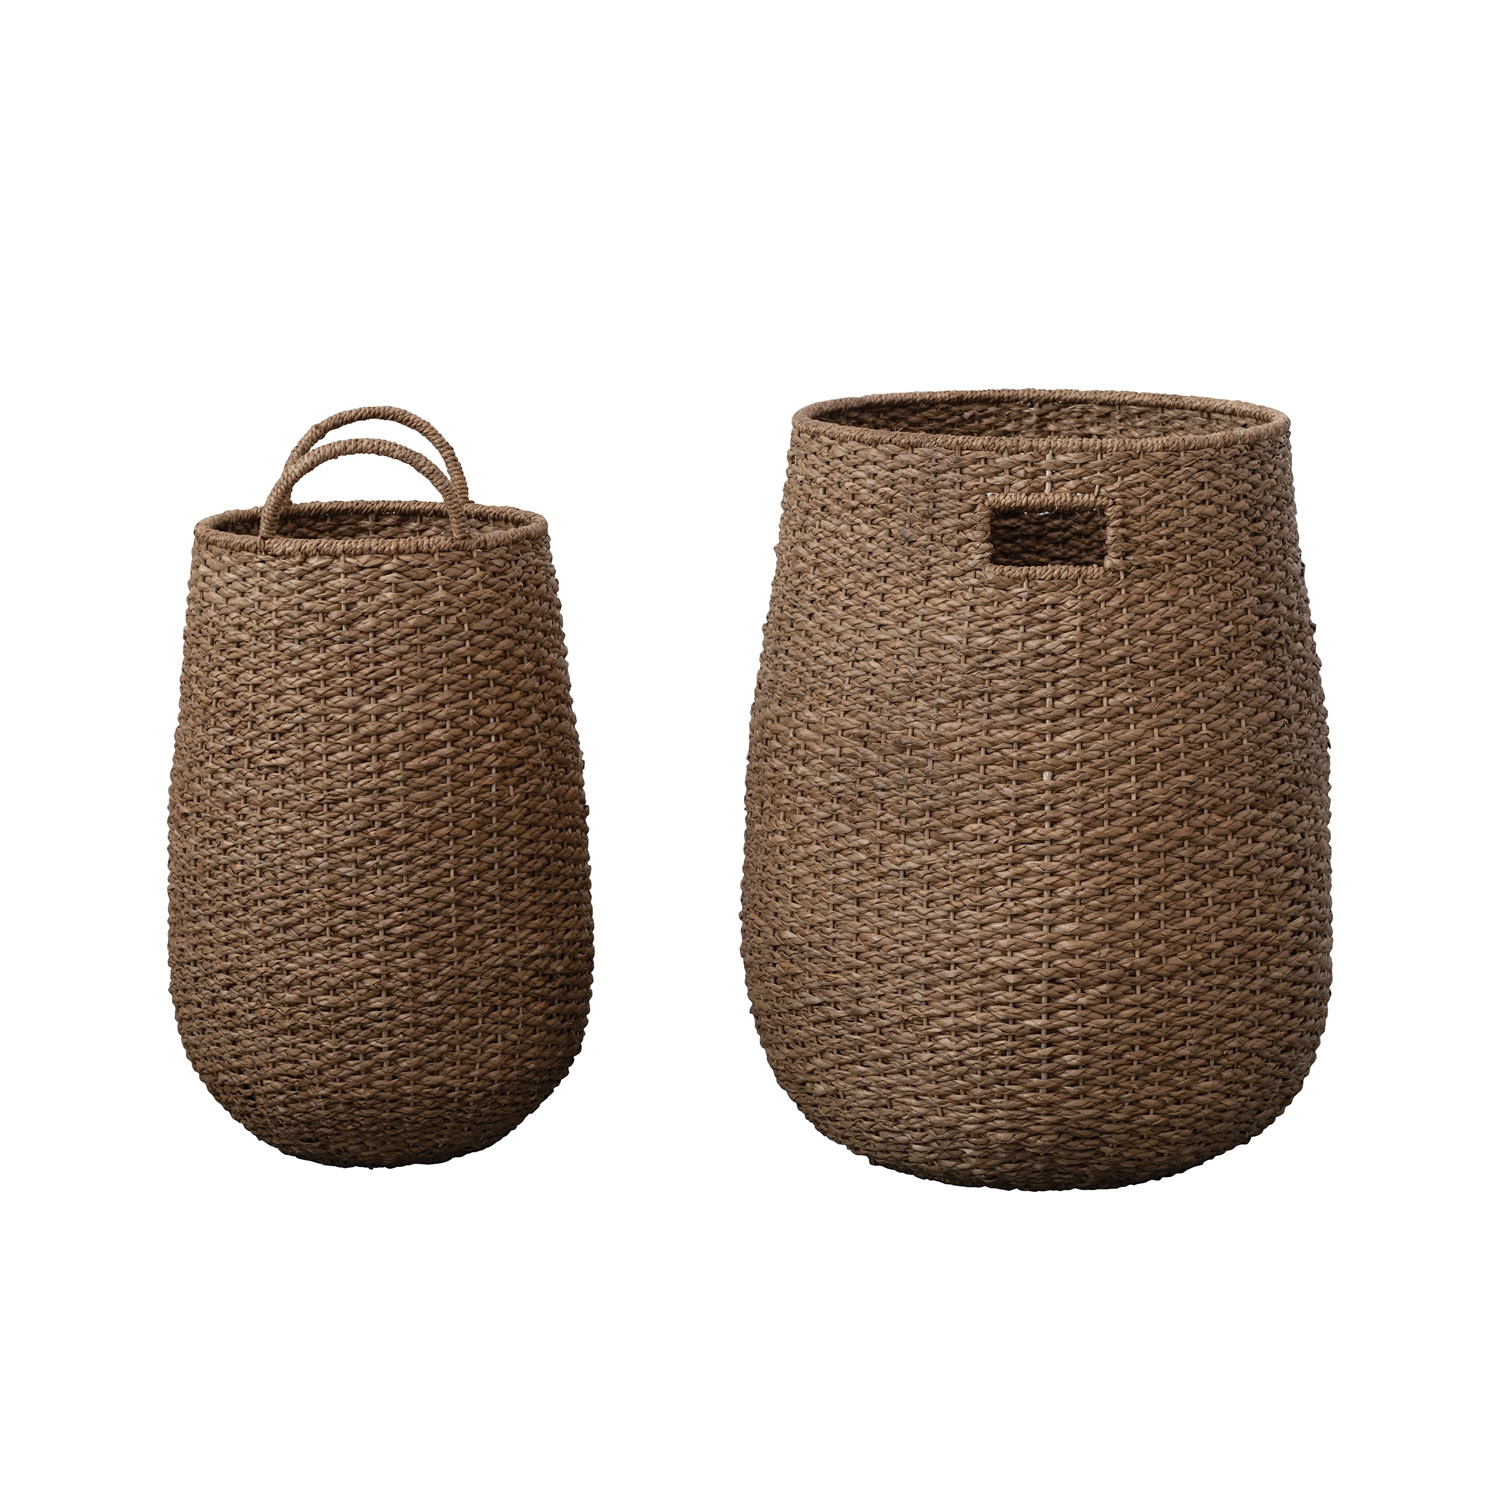 Hand-Woven Bankuan and Rattan Baskets with Handles, Set of 2 - Image 0